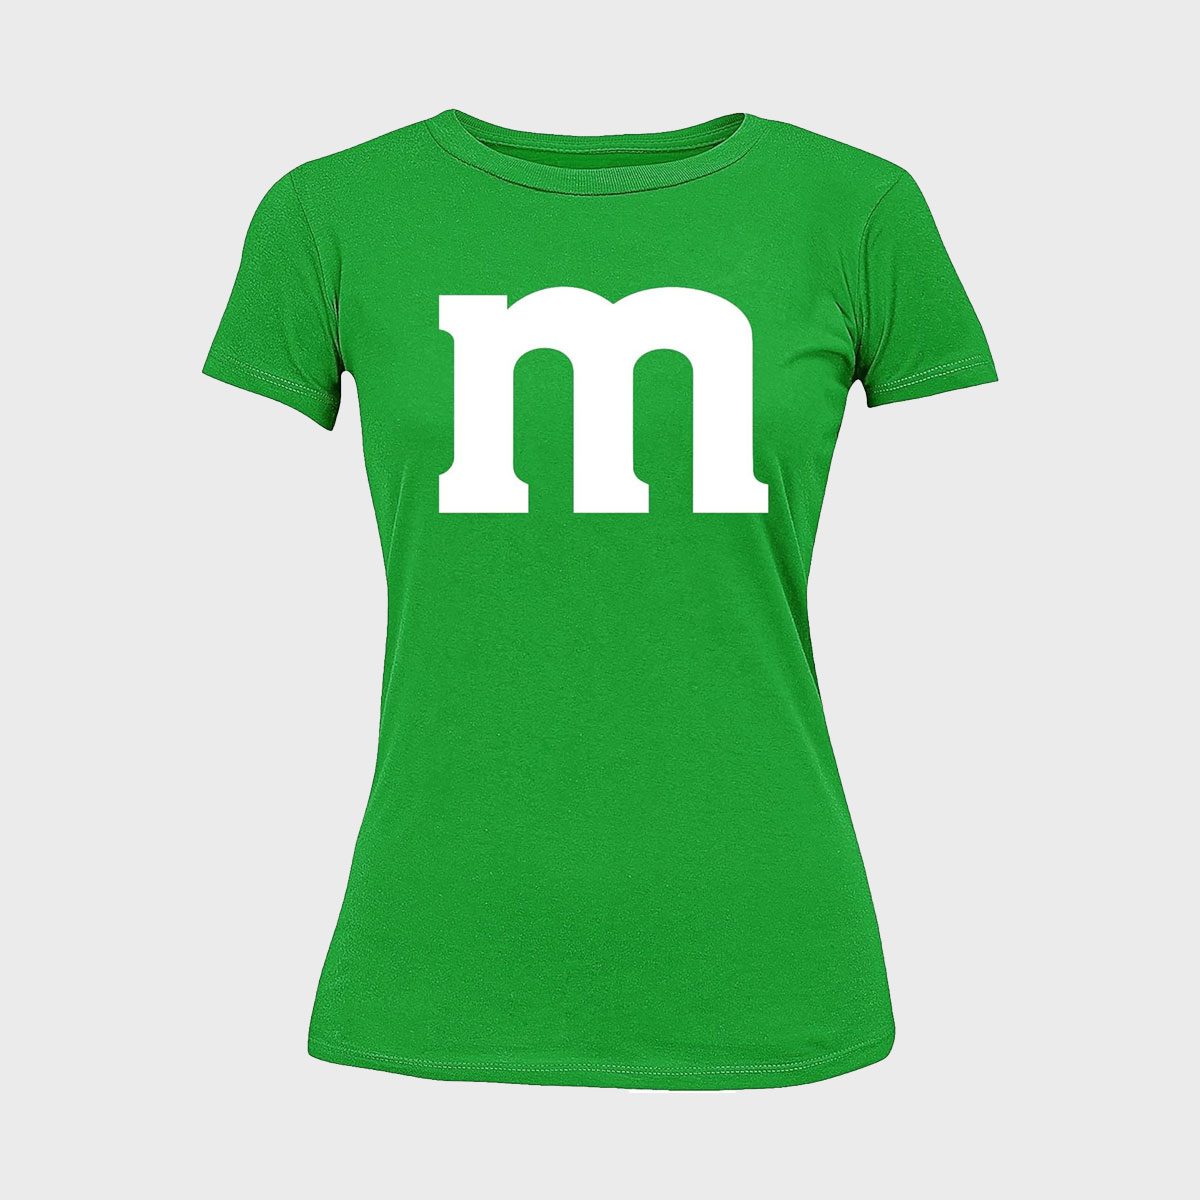 M Halloween Team Costume Funny Party Women's T Shirt Ecomm Via Amazon.com